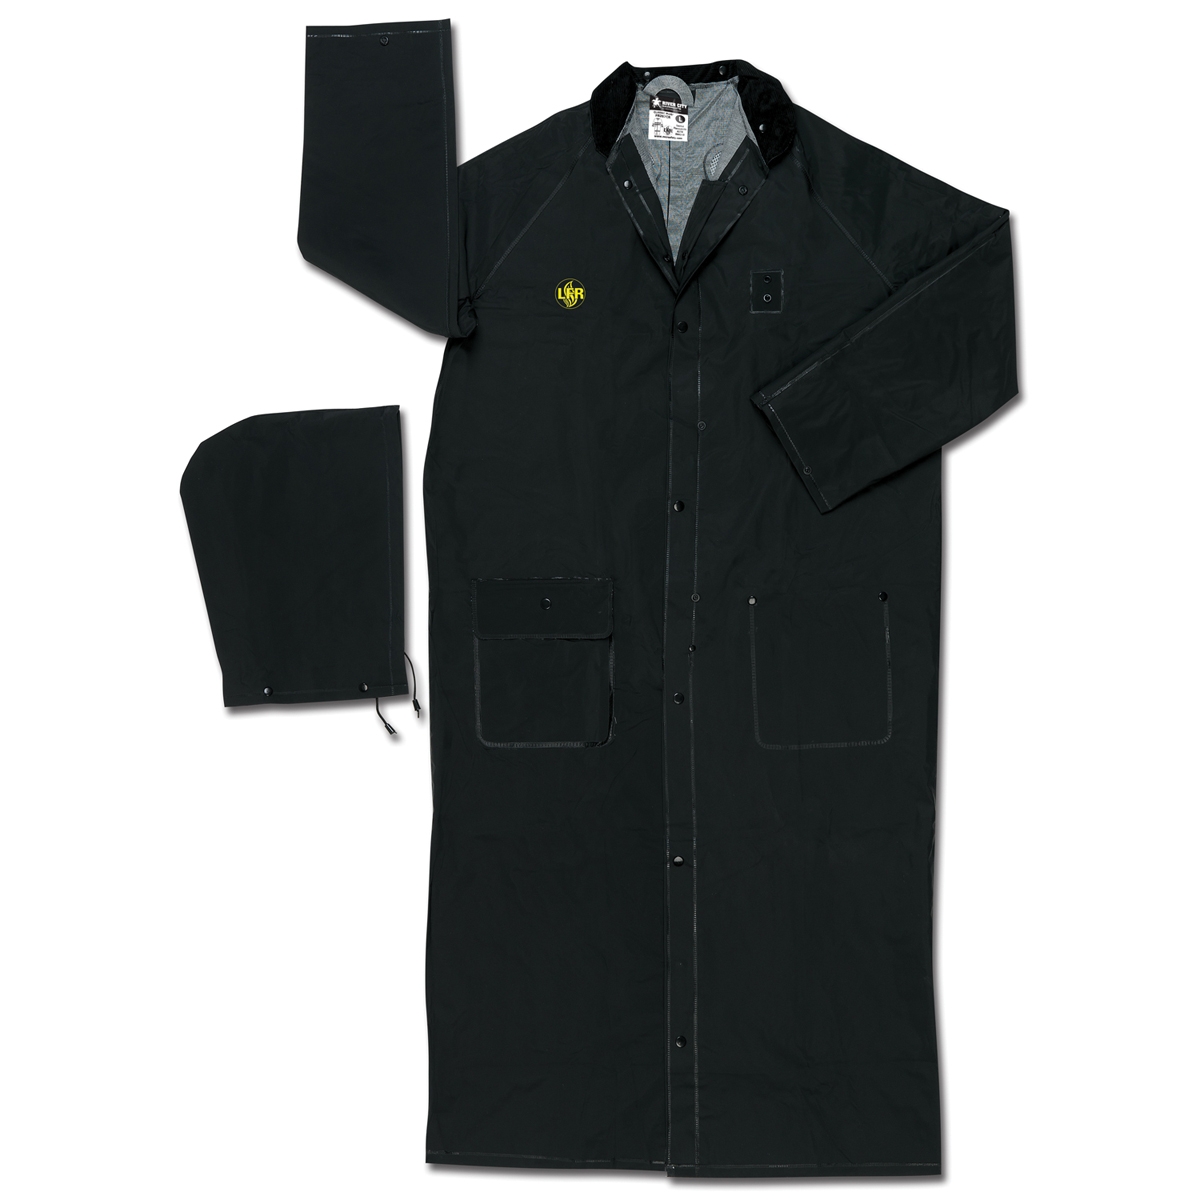 River City Dominator 2 Piece Suit Jacket with Bib Trousers PVC/Polyester XXXXL